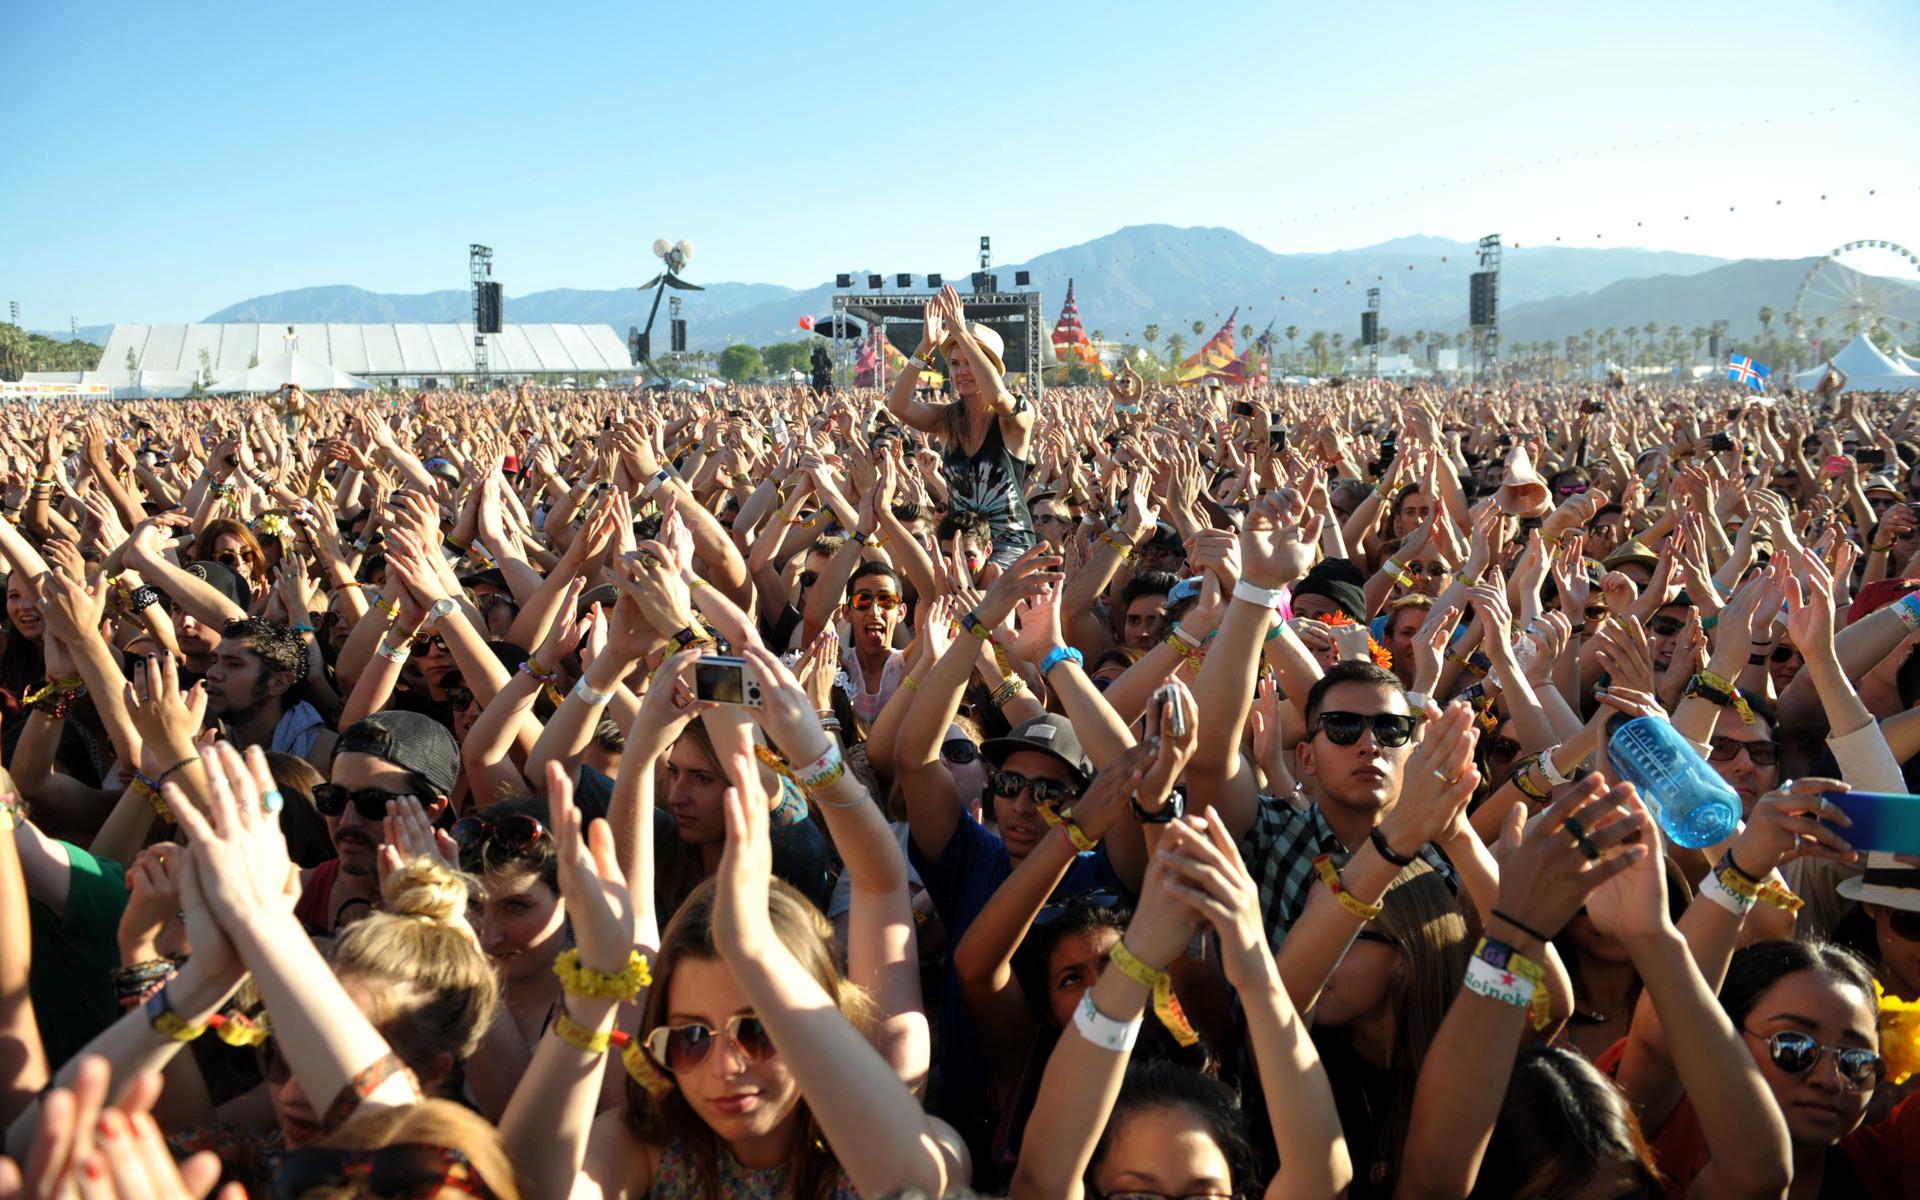 Konsertpublik på amerikanska festivalen Coachella 2013.